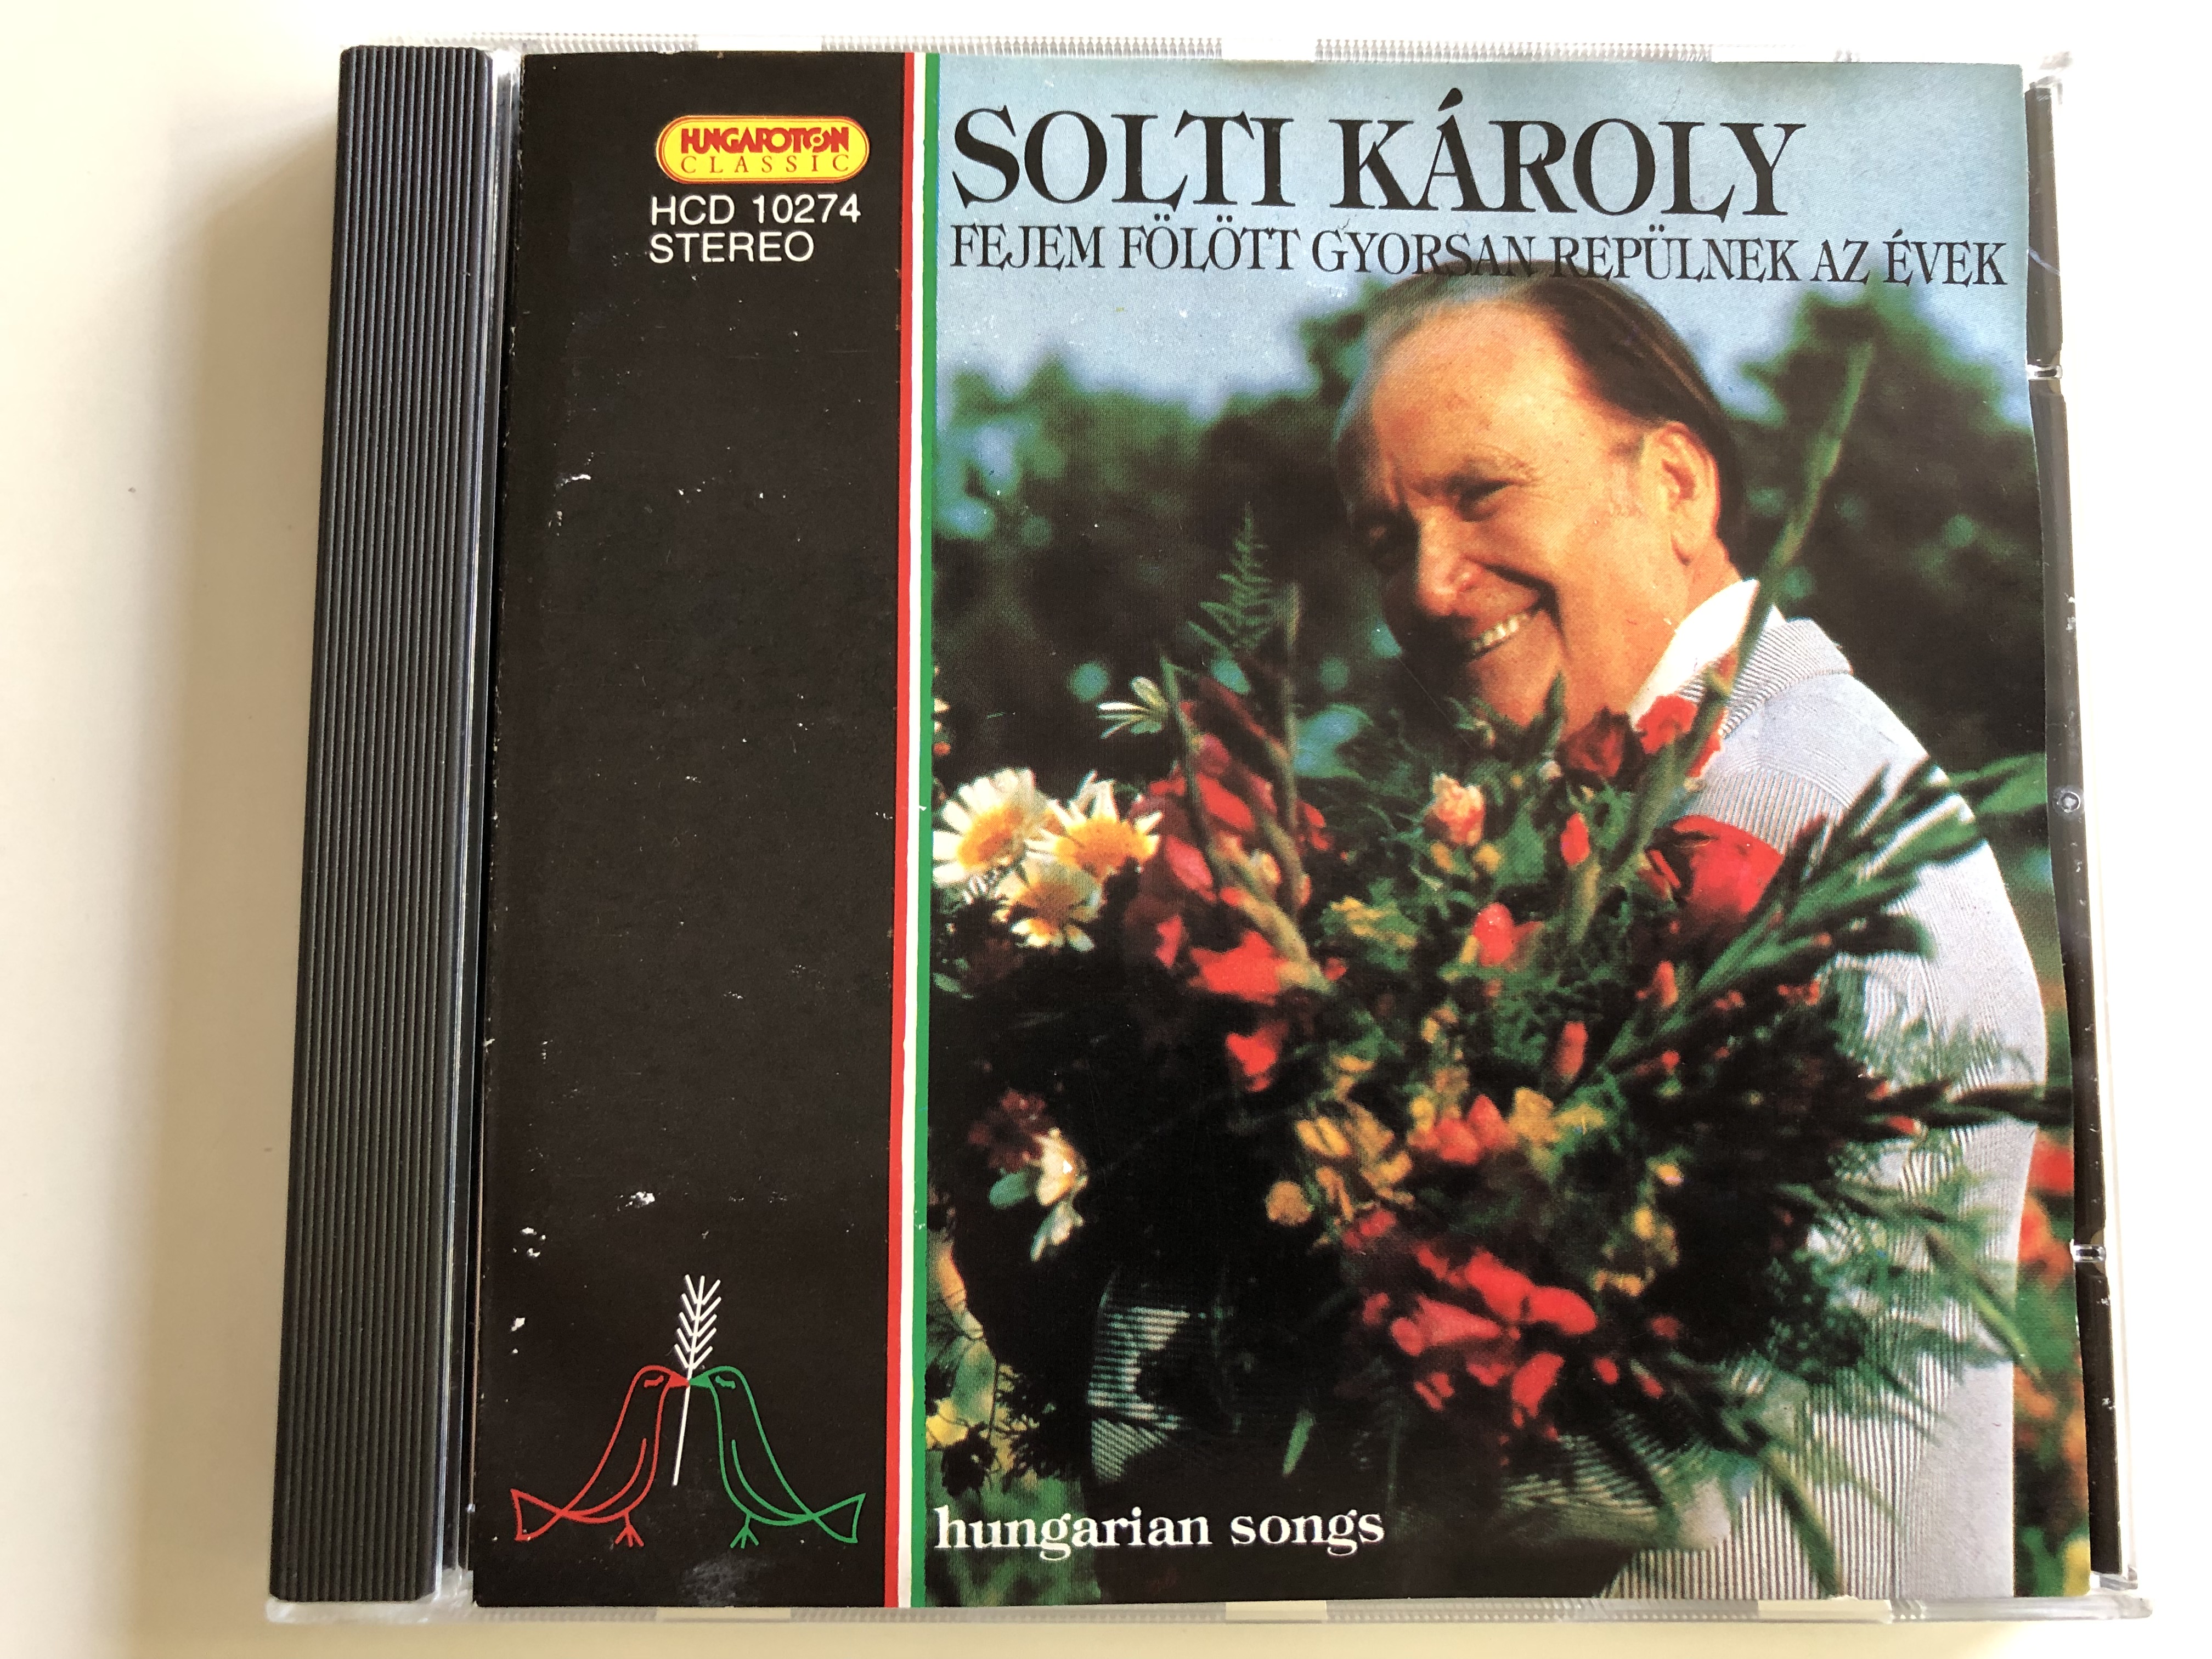 solti-k-roly-fejem-f-l-tt-gyorsan-rep-lnek-az-vek-hungarian-songs-hungaroton-audio-cd-1995-hcd-10274-1-.jpg